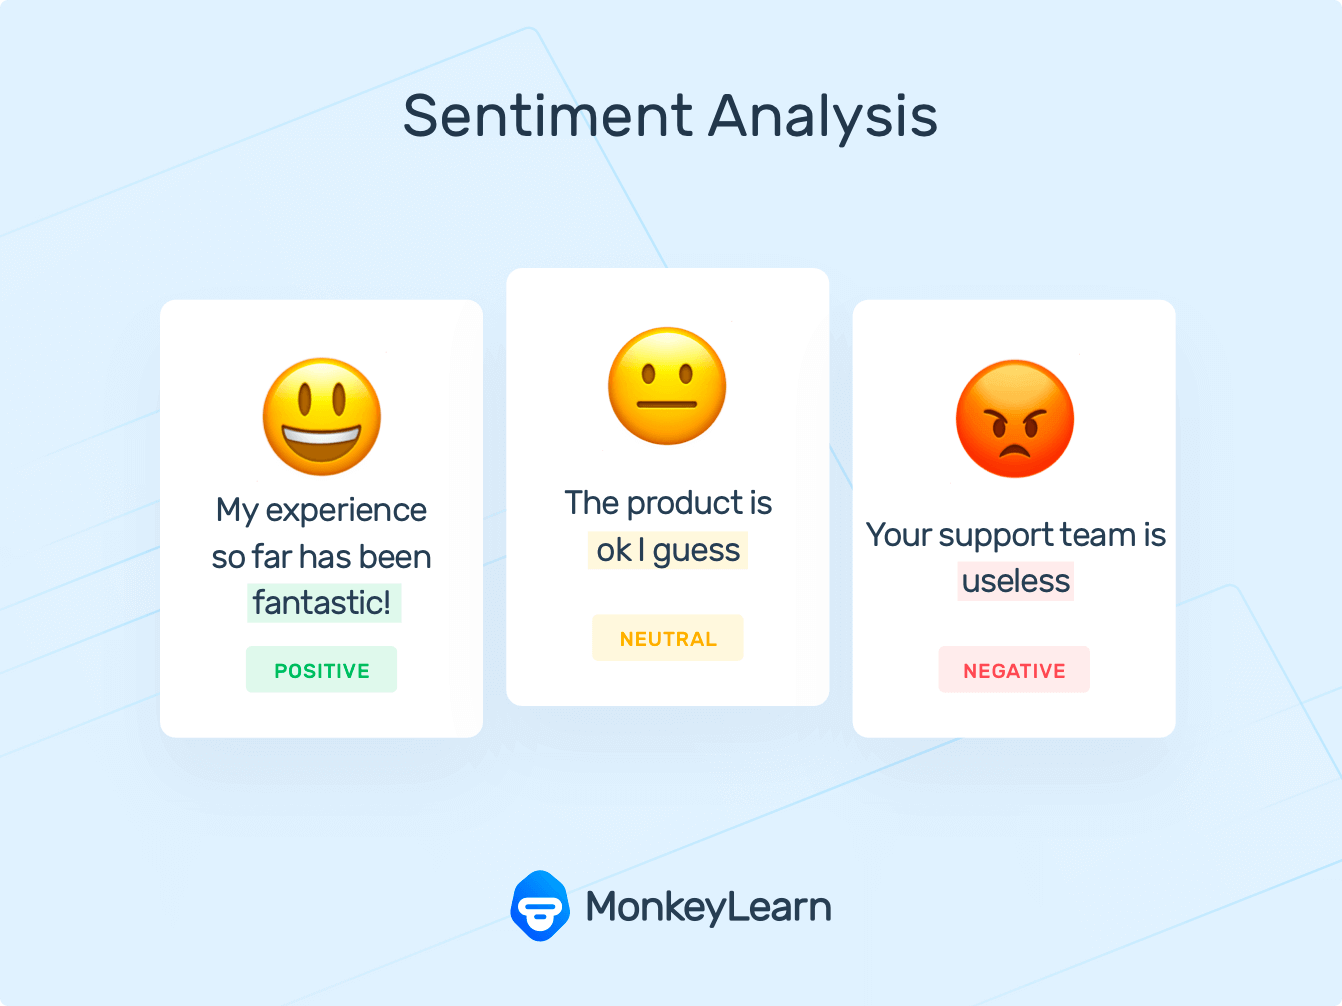 MonkeyLearn example of Sentiment Analysis